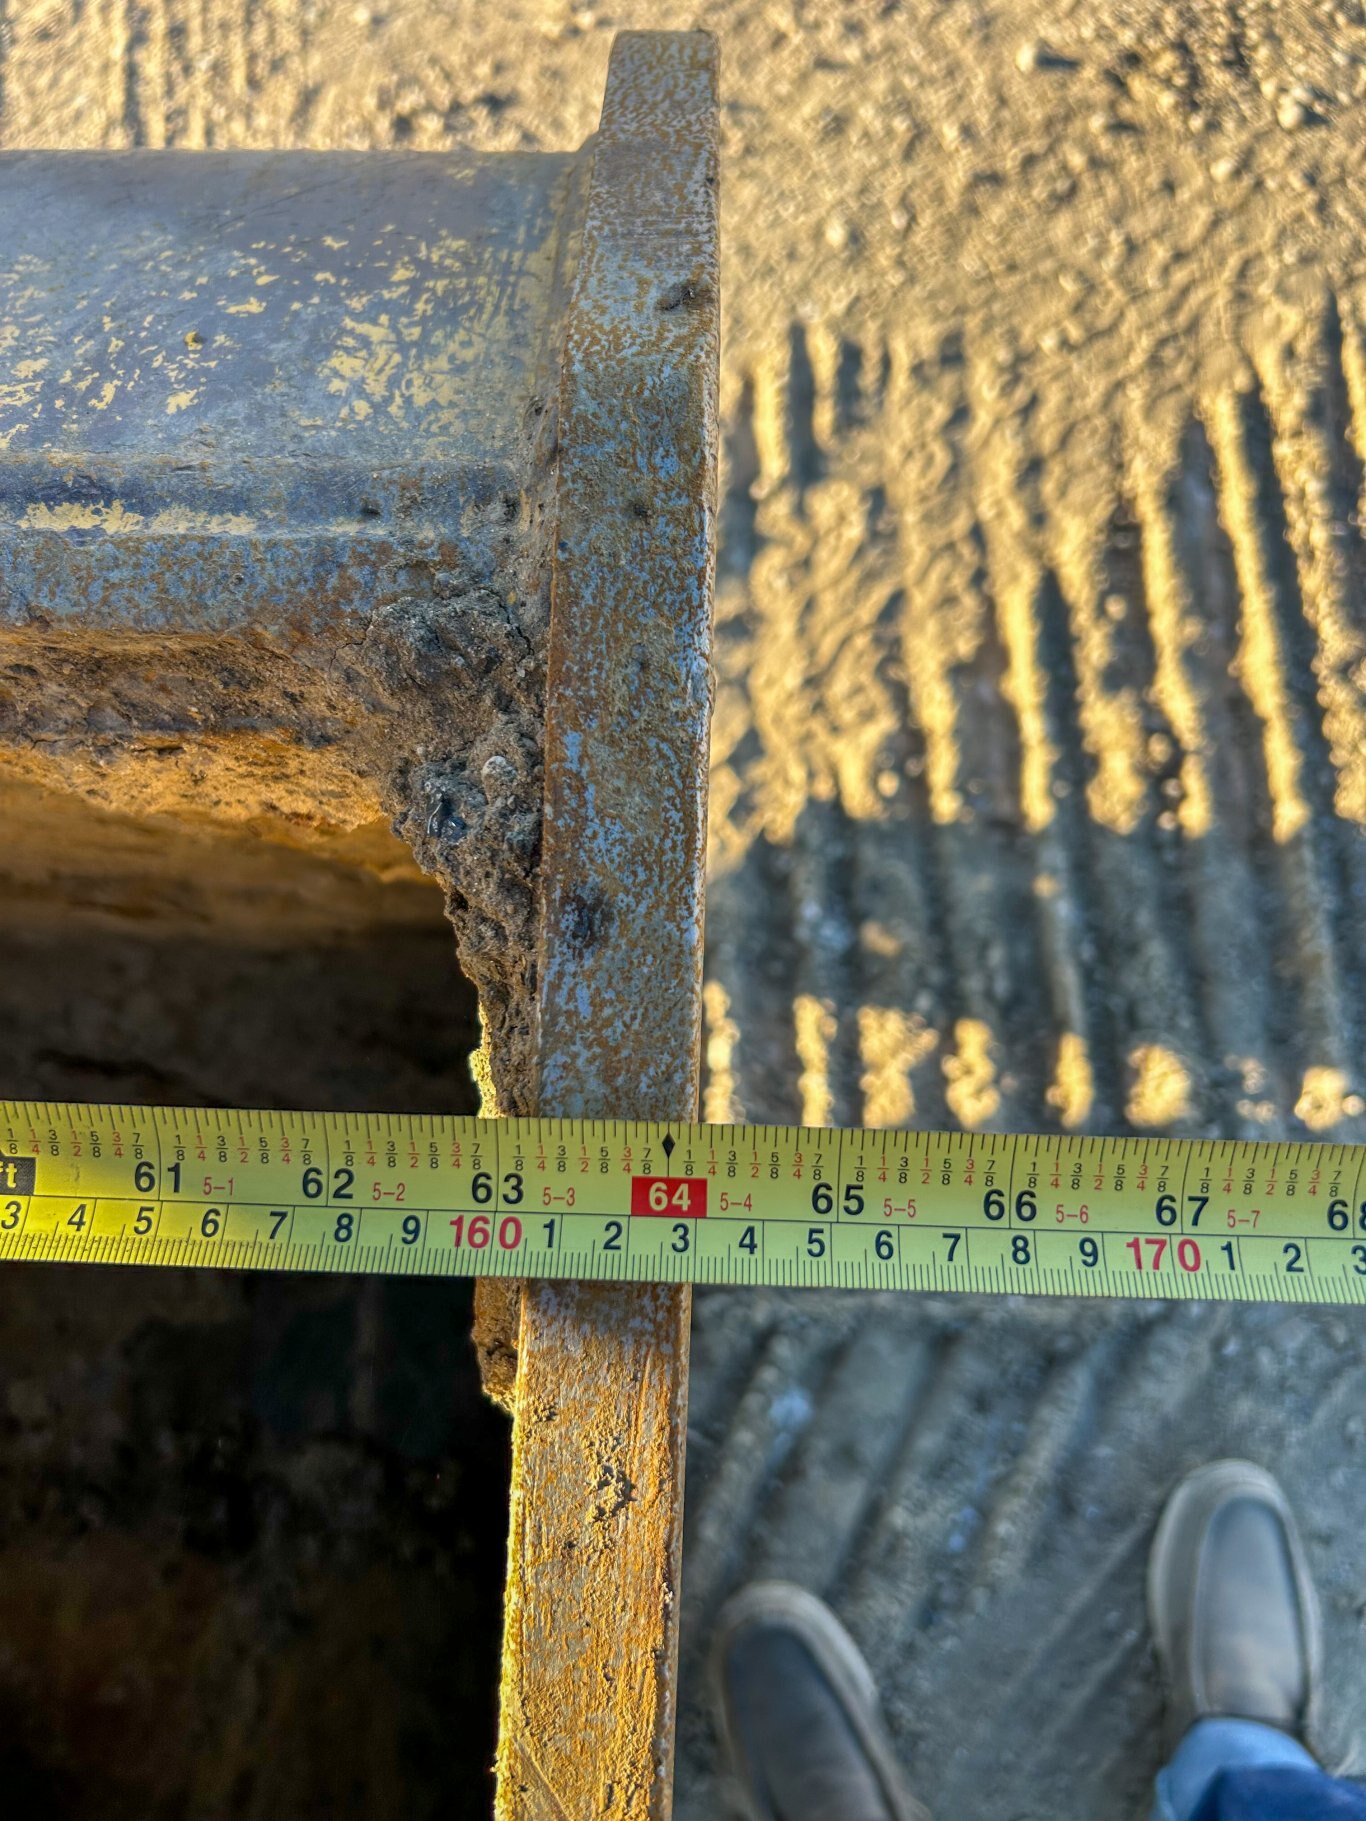 2015 John Deere 290G LC Excavator w/ Thumb